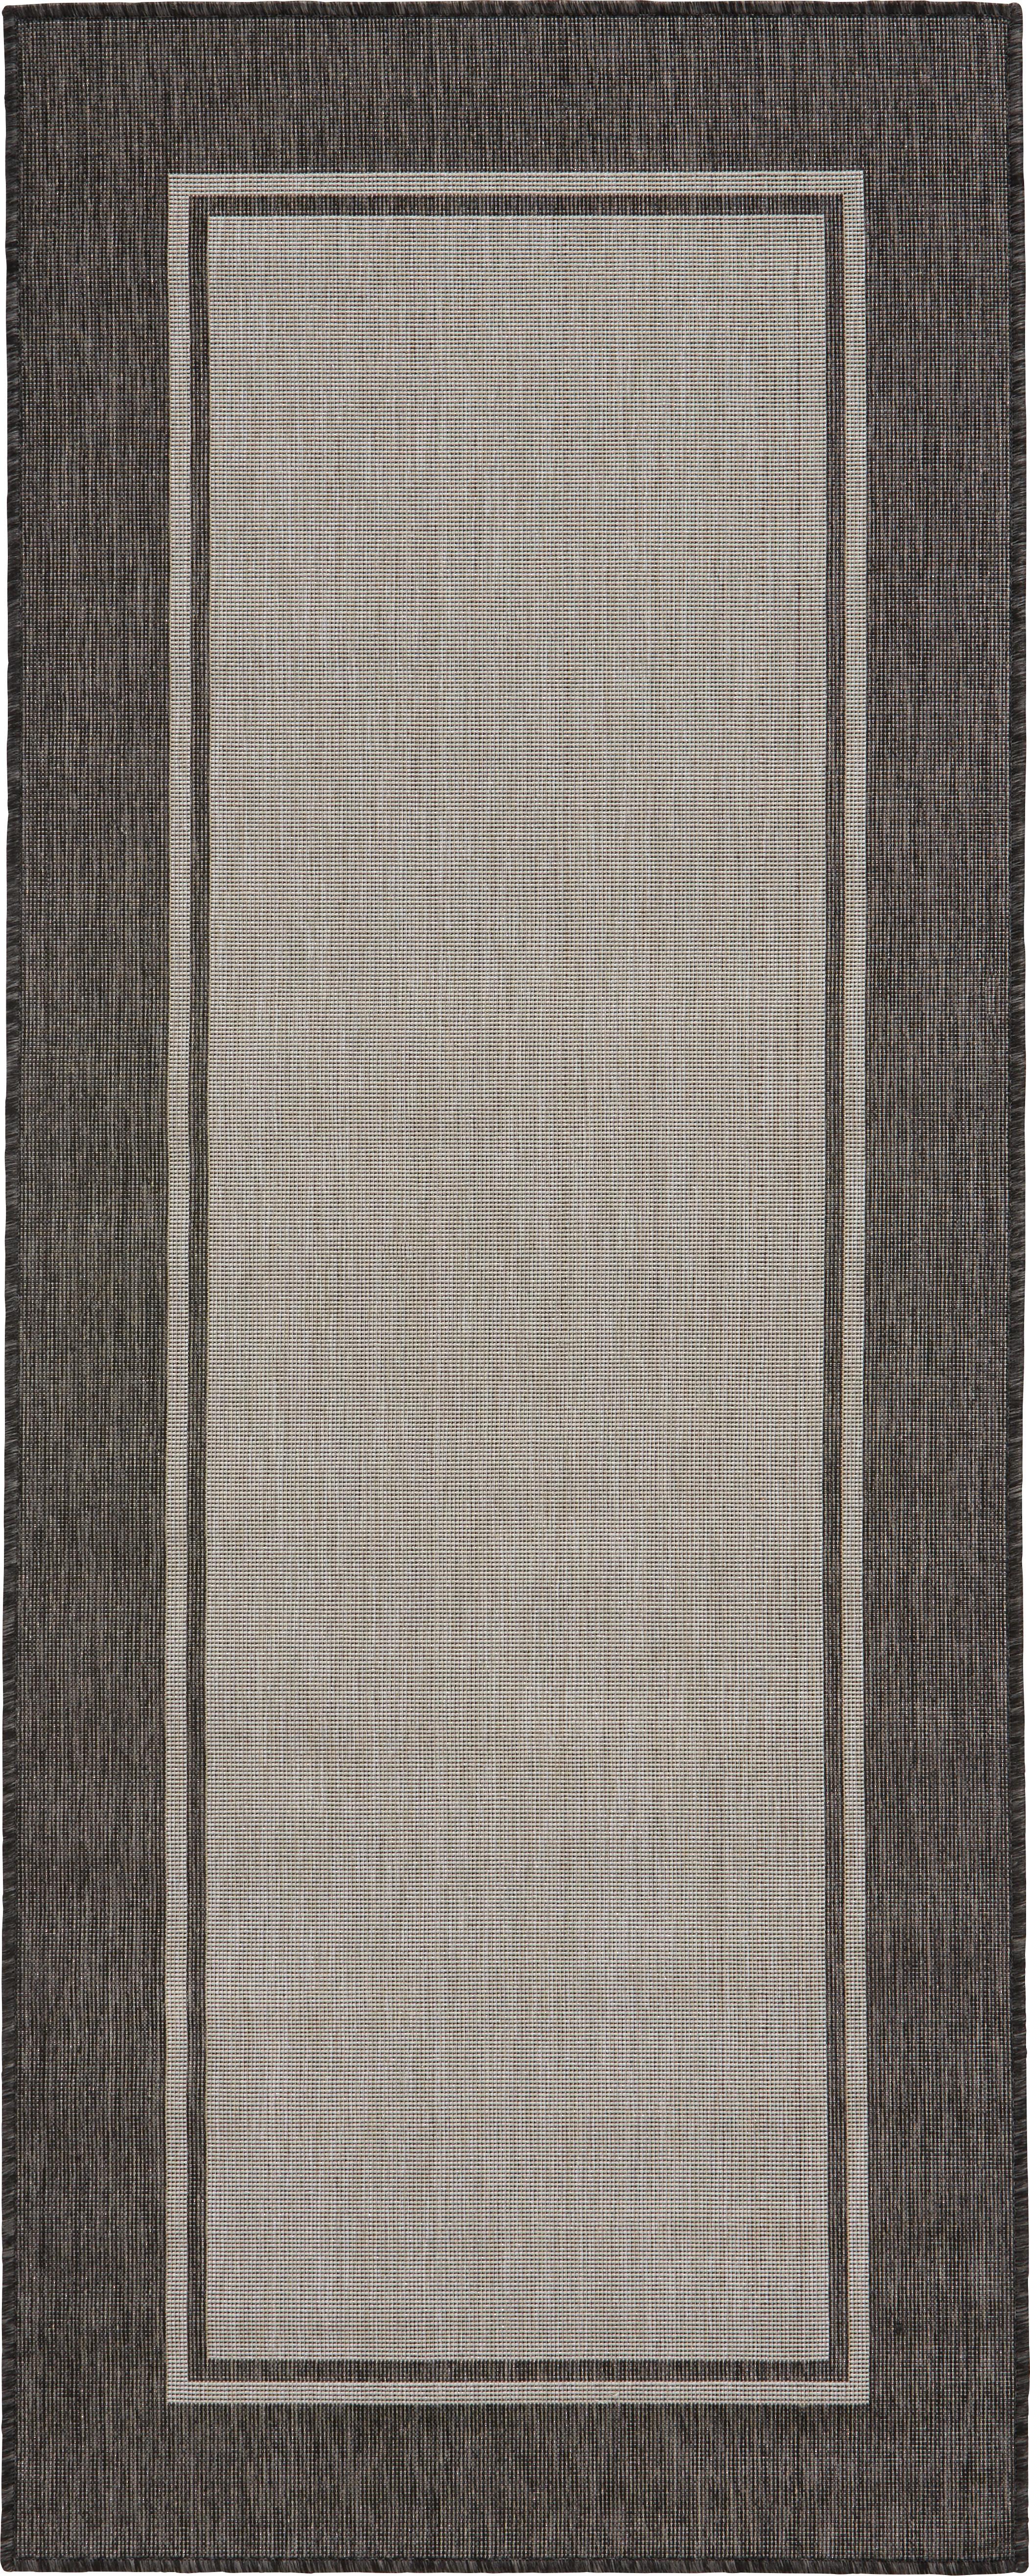 Teppich Läufer Grau Justin 80x200 cm - Grau, KONVENTIONELL, Textil (80/200cm) - James Wood